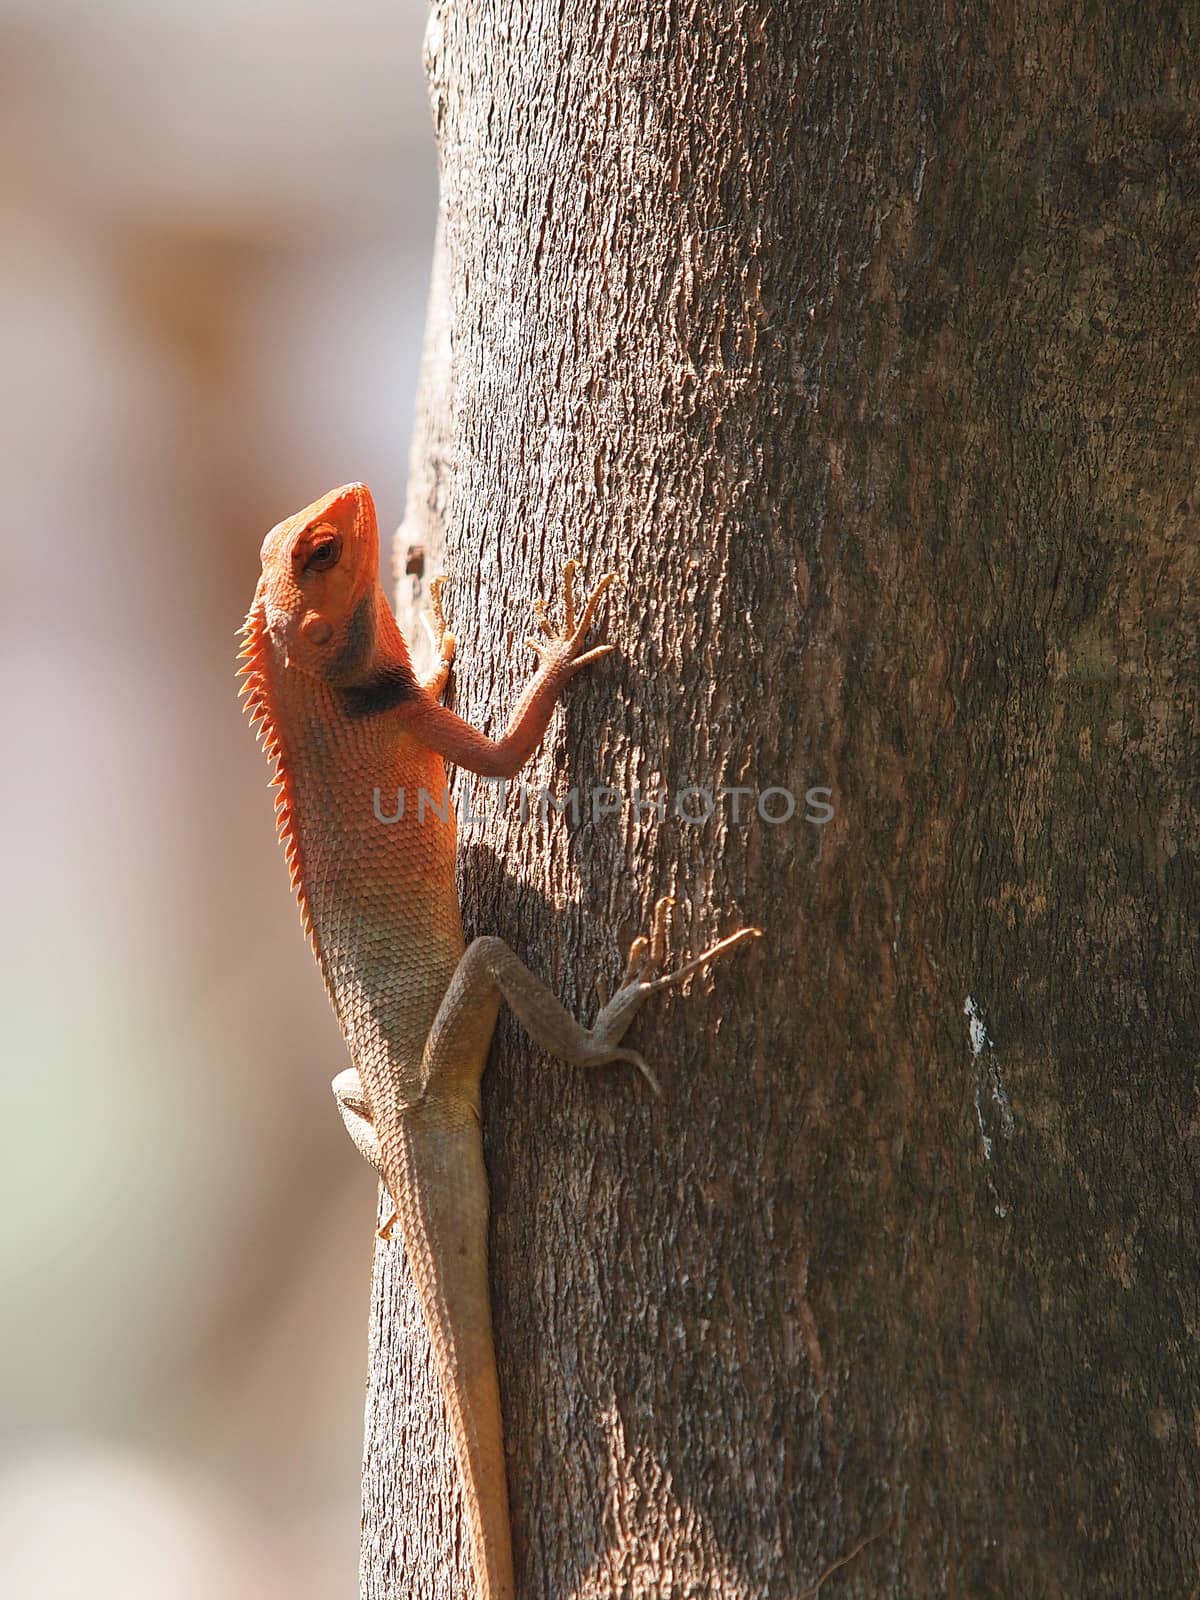 orange lizard sitting on wood in the natural habitat. close-up photos       